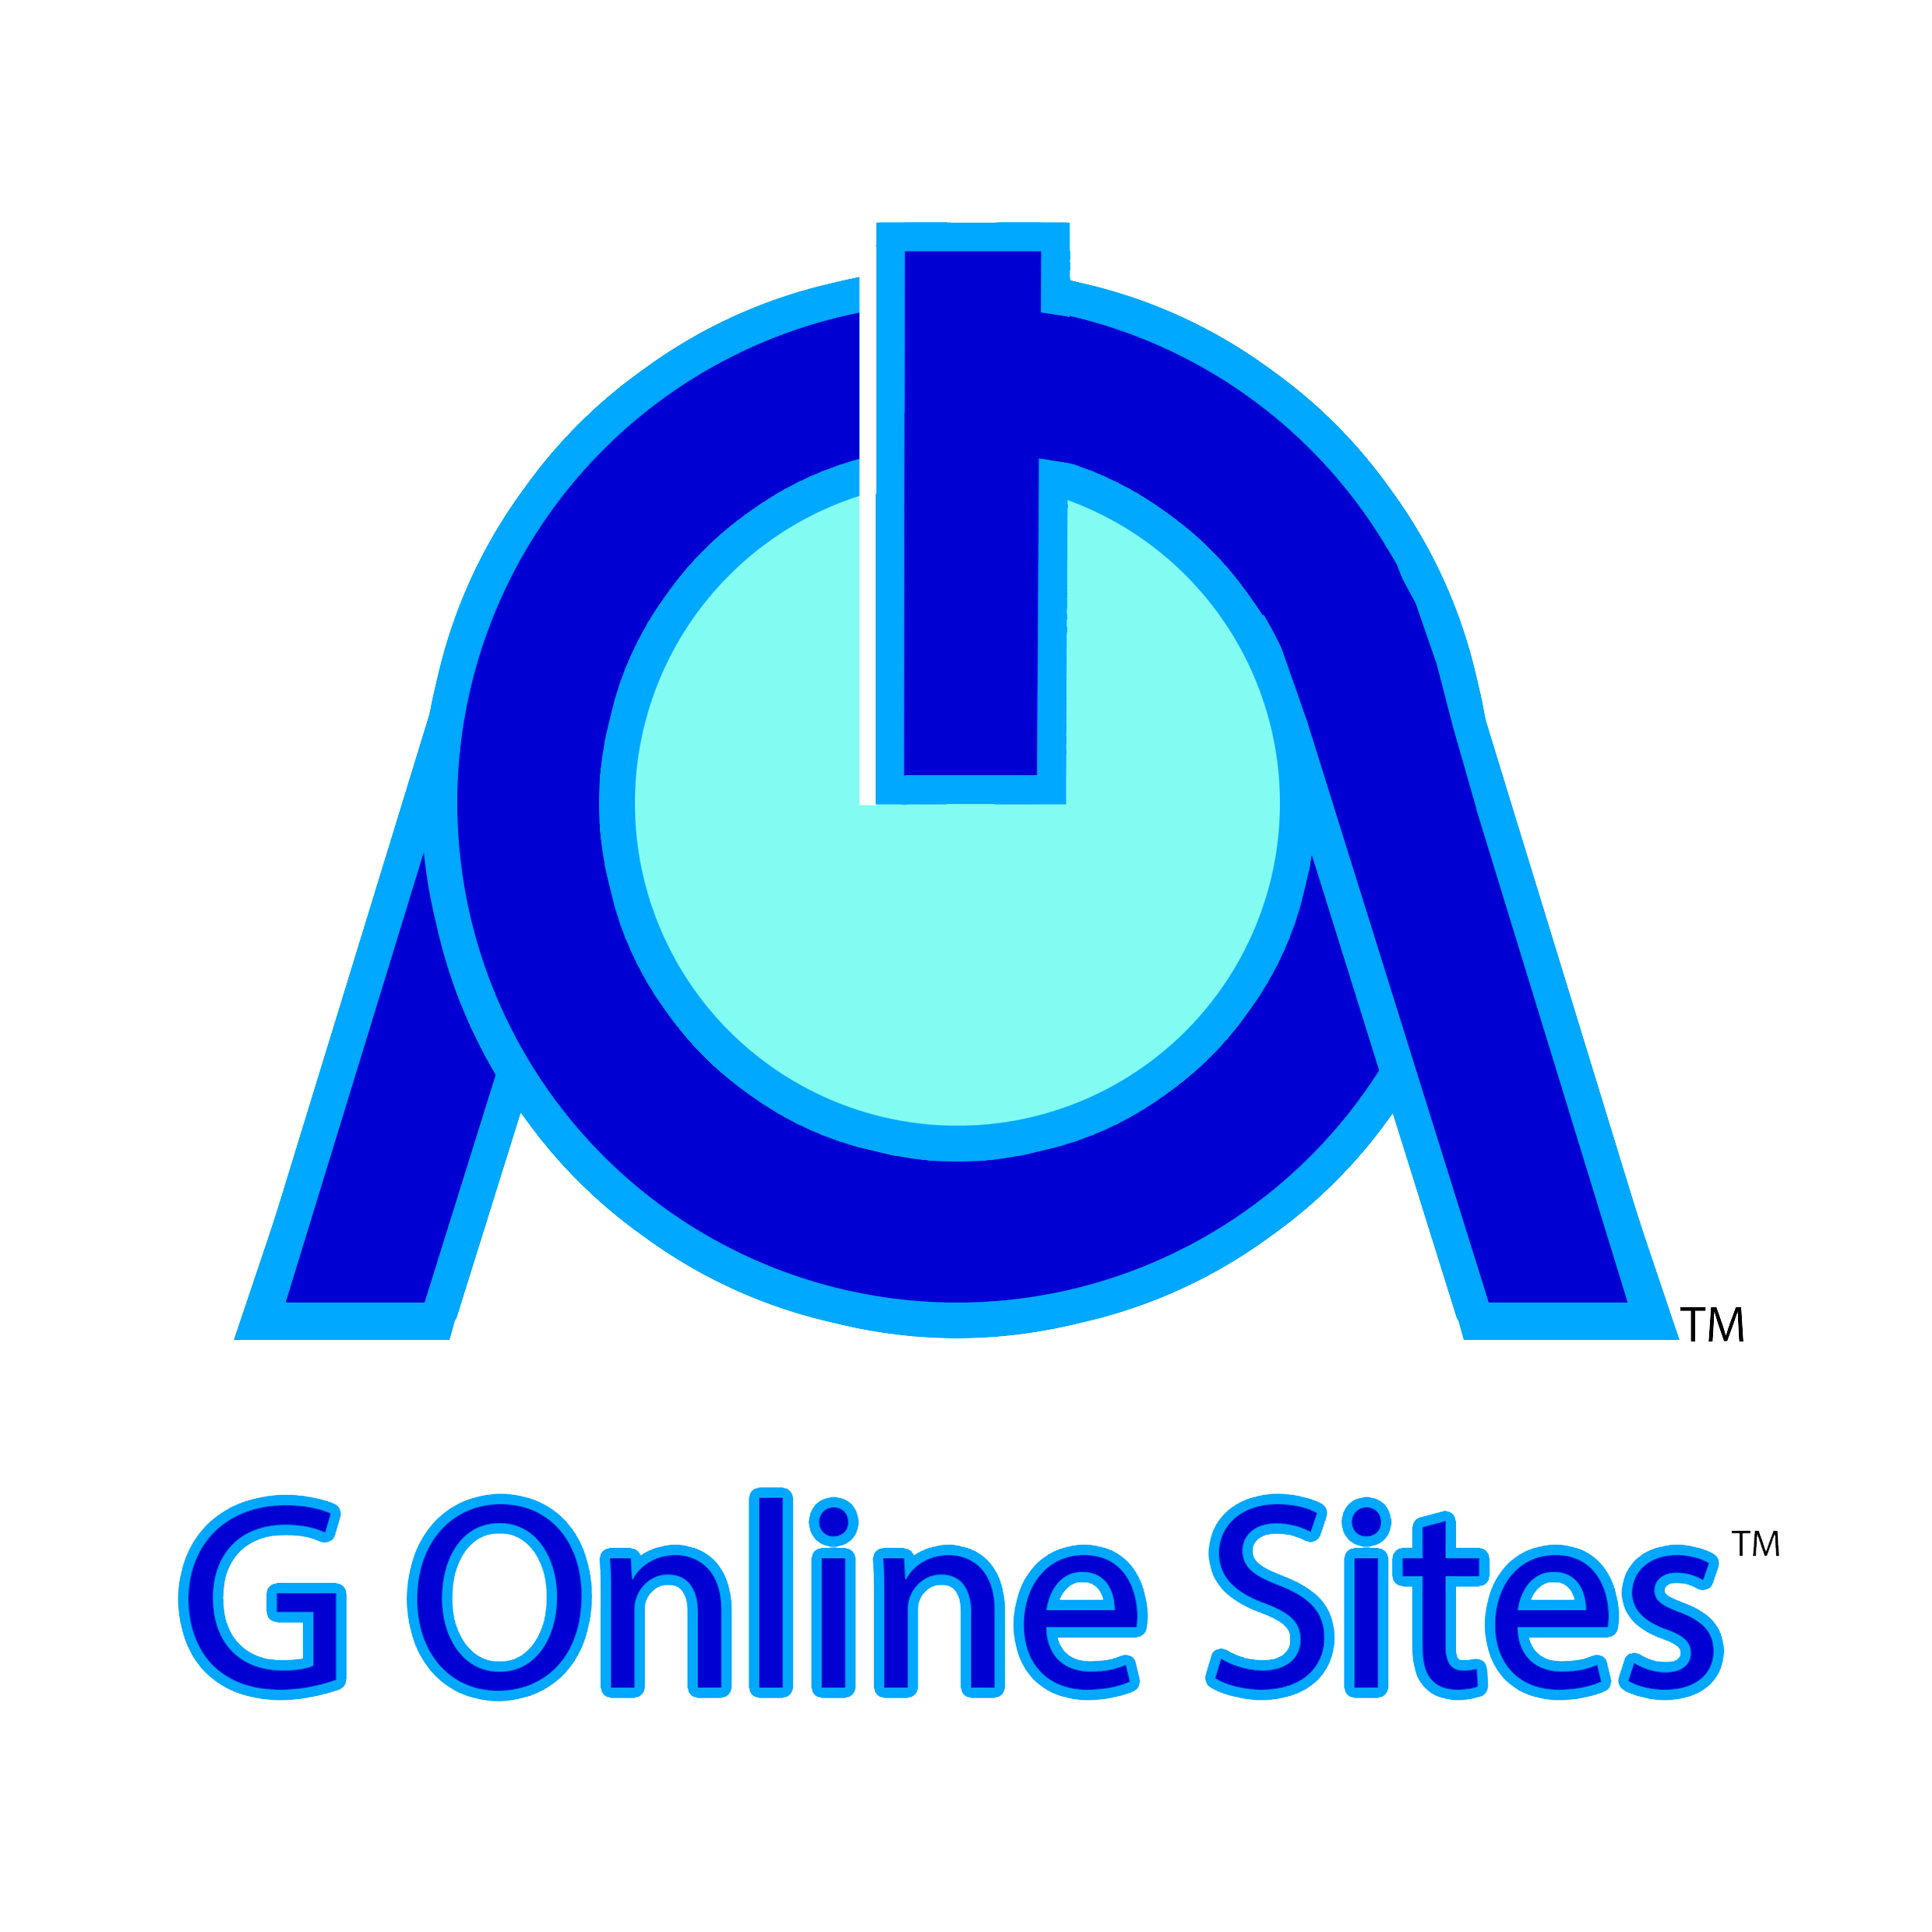 G Online Sites